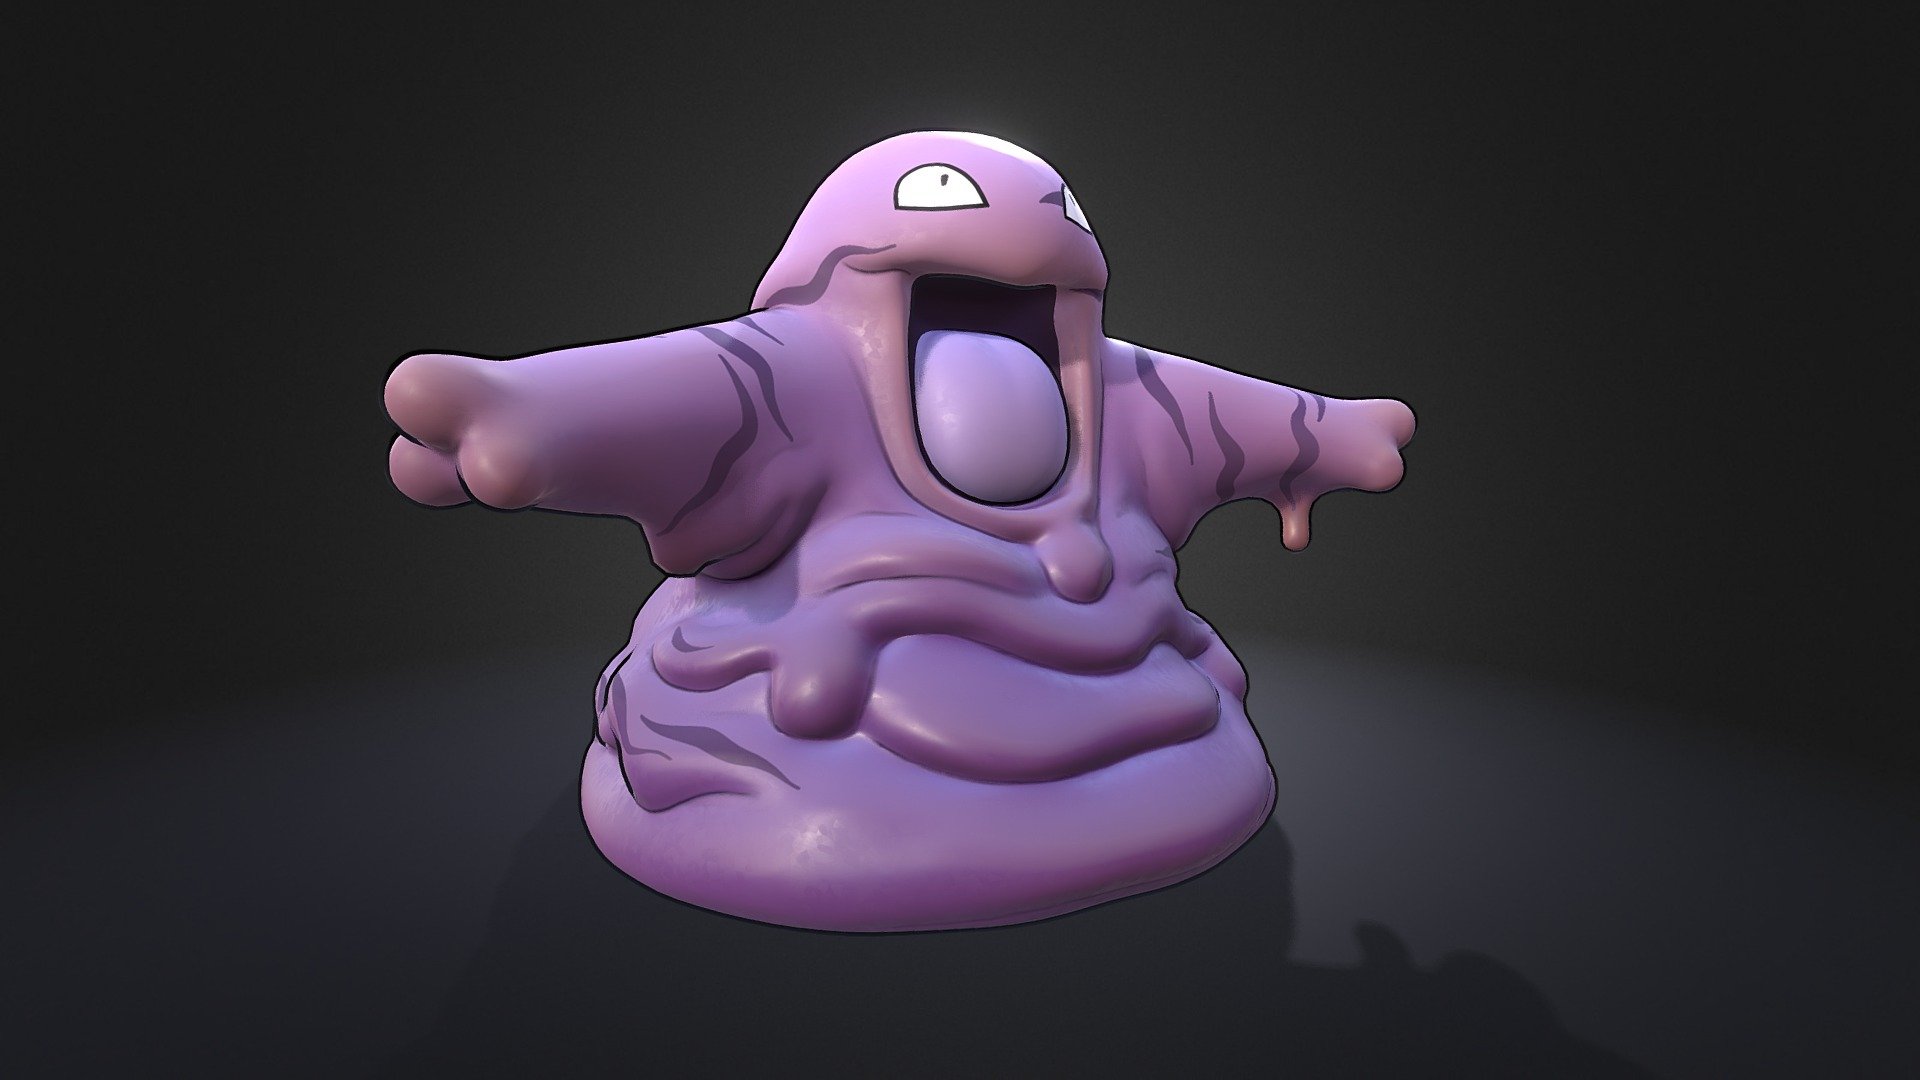 Second one shaped like purple poo - Grimer Pokemon - 3D model by 3dlogicus 3d model